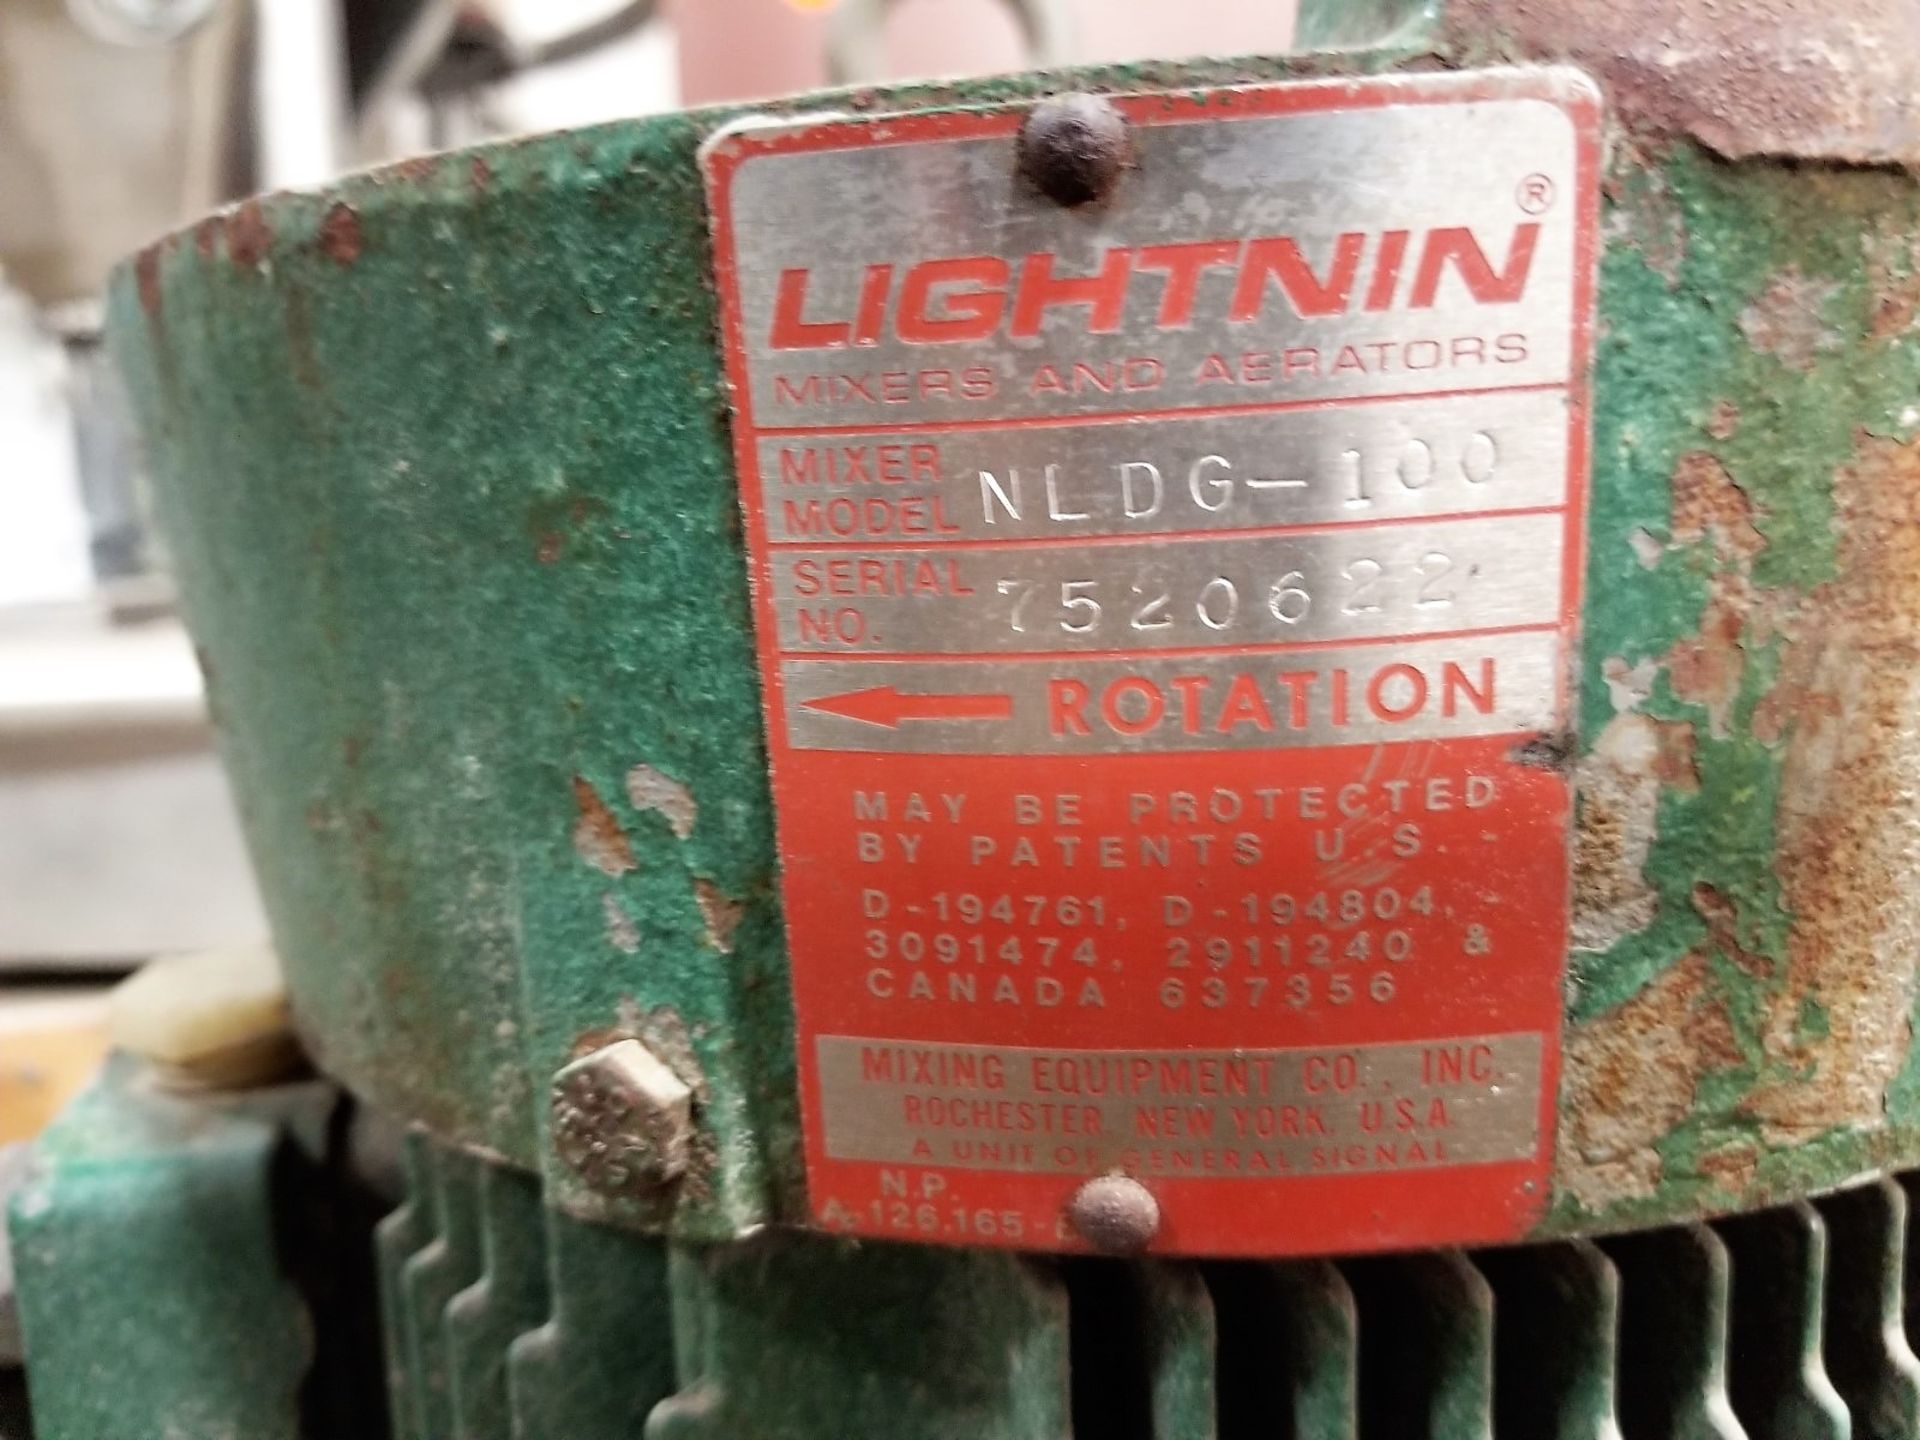 Lot Location: Greensboro NC Used 1HP Lightnin Mixer Agitator Ð Model: NLDG-100 - Image 5 of 9